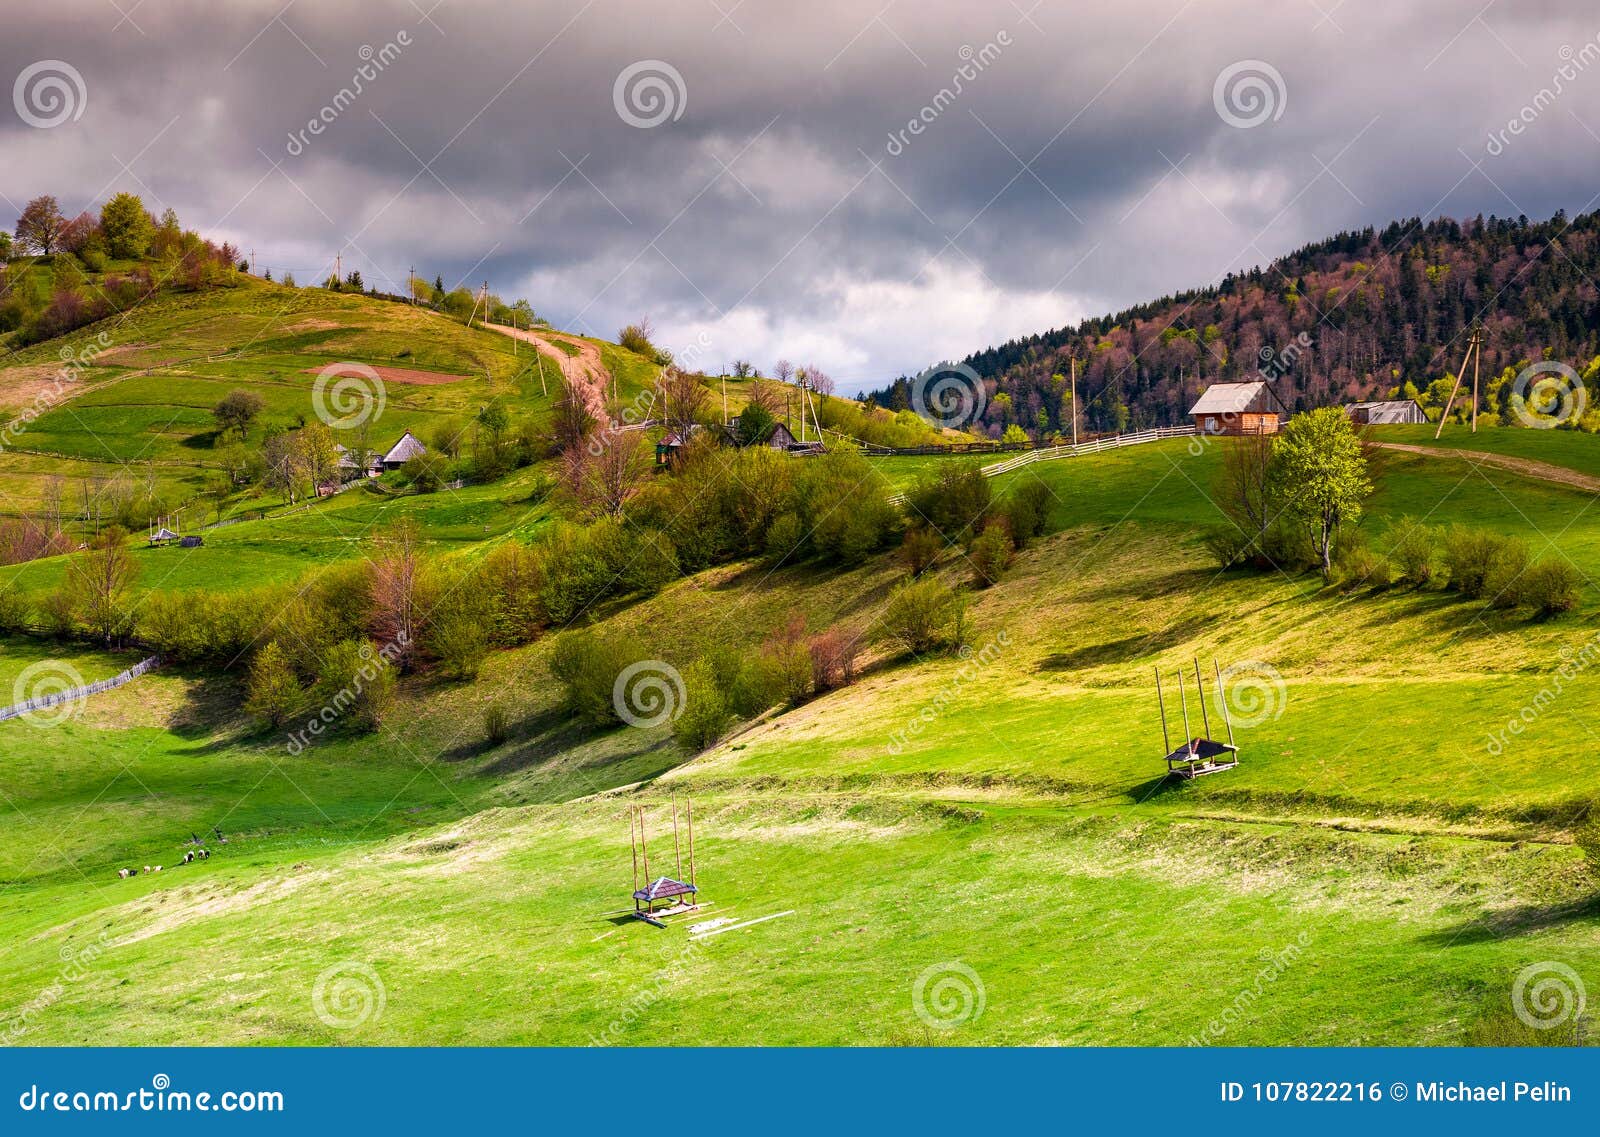 wooden fences of rural area on grassy hillsides